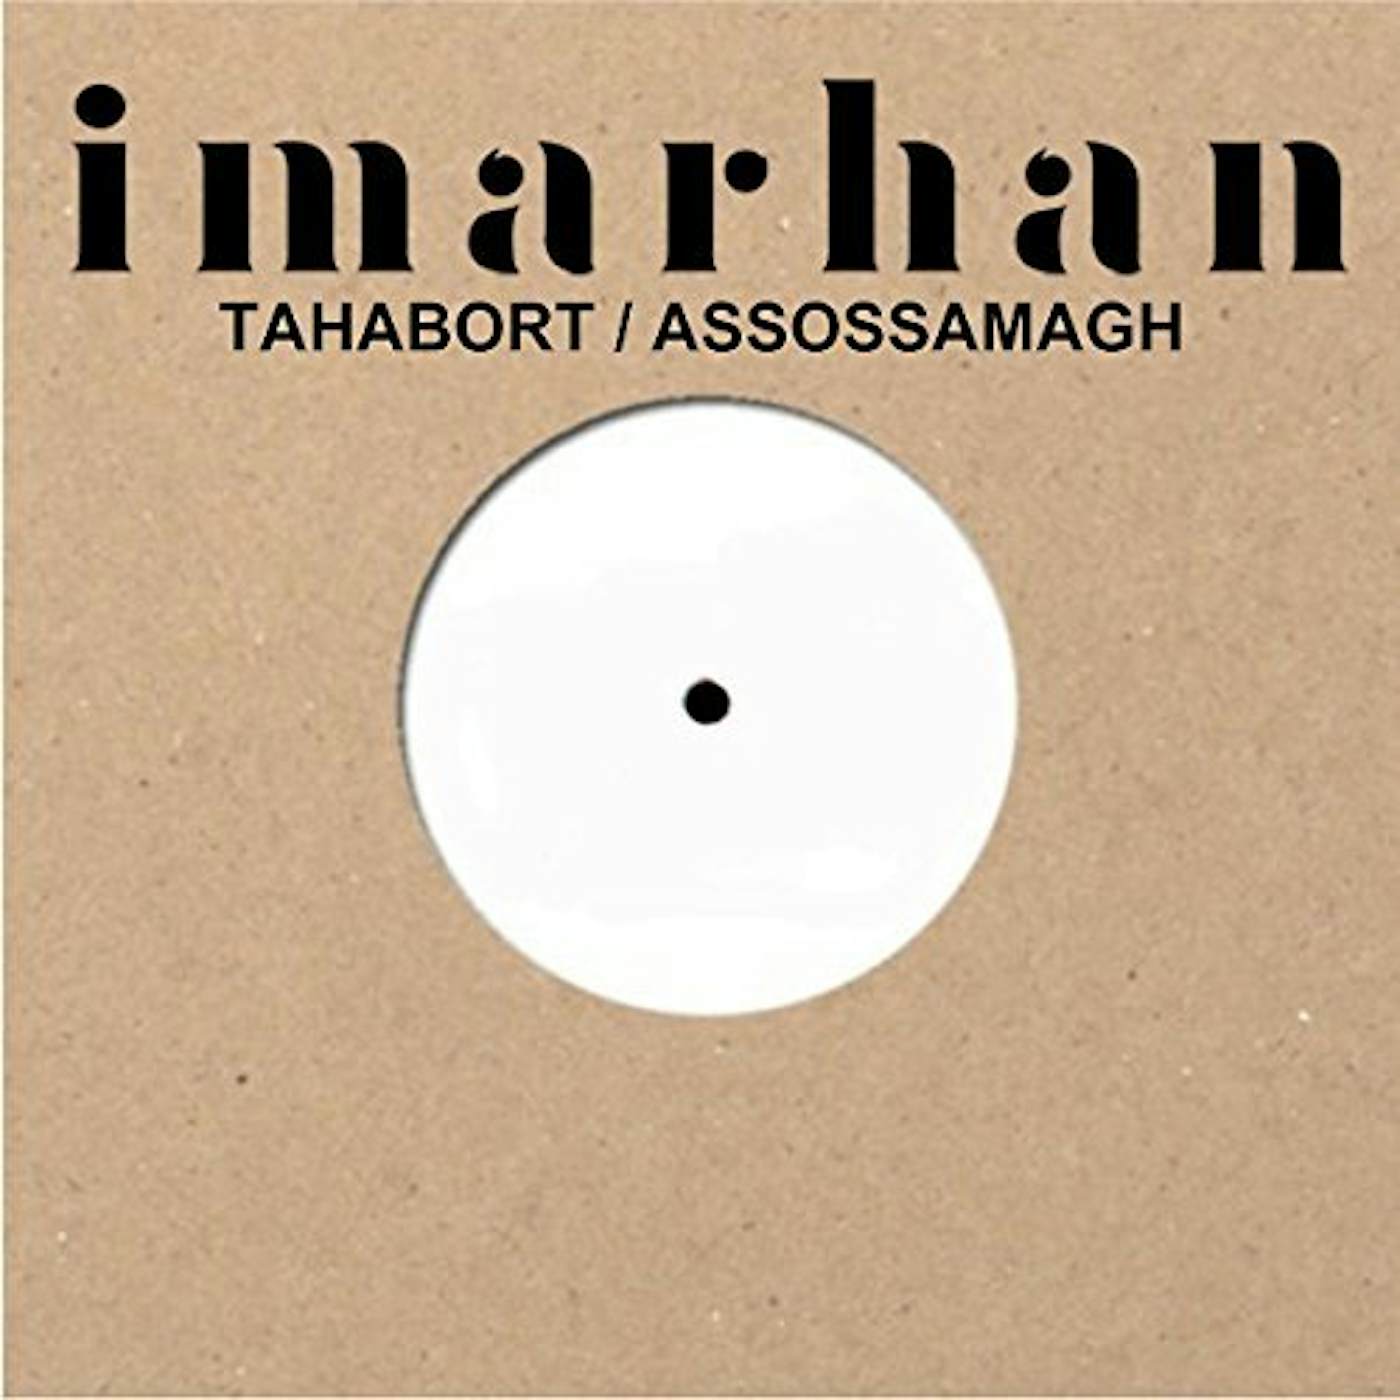 Imarhan TAHABORT / ASSOSSAMAGH Vinyl Record - UK Release